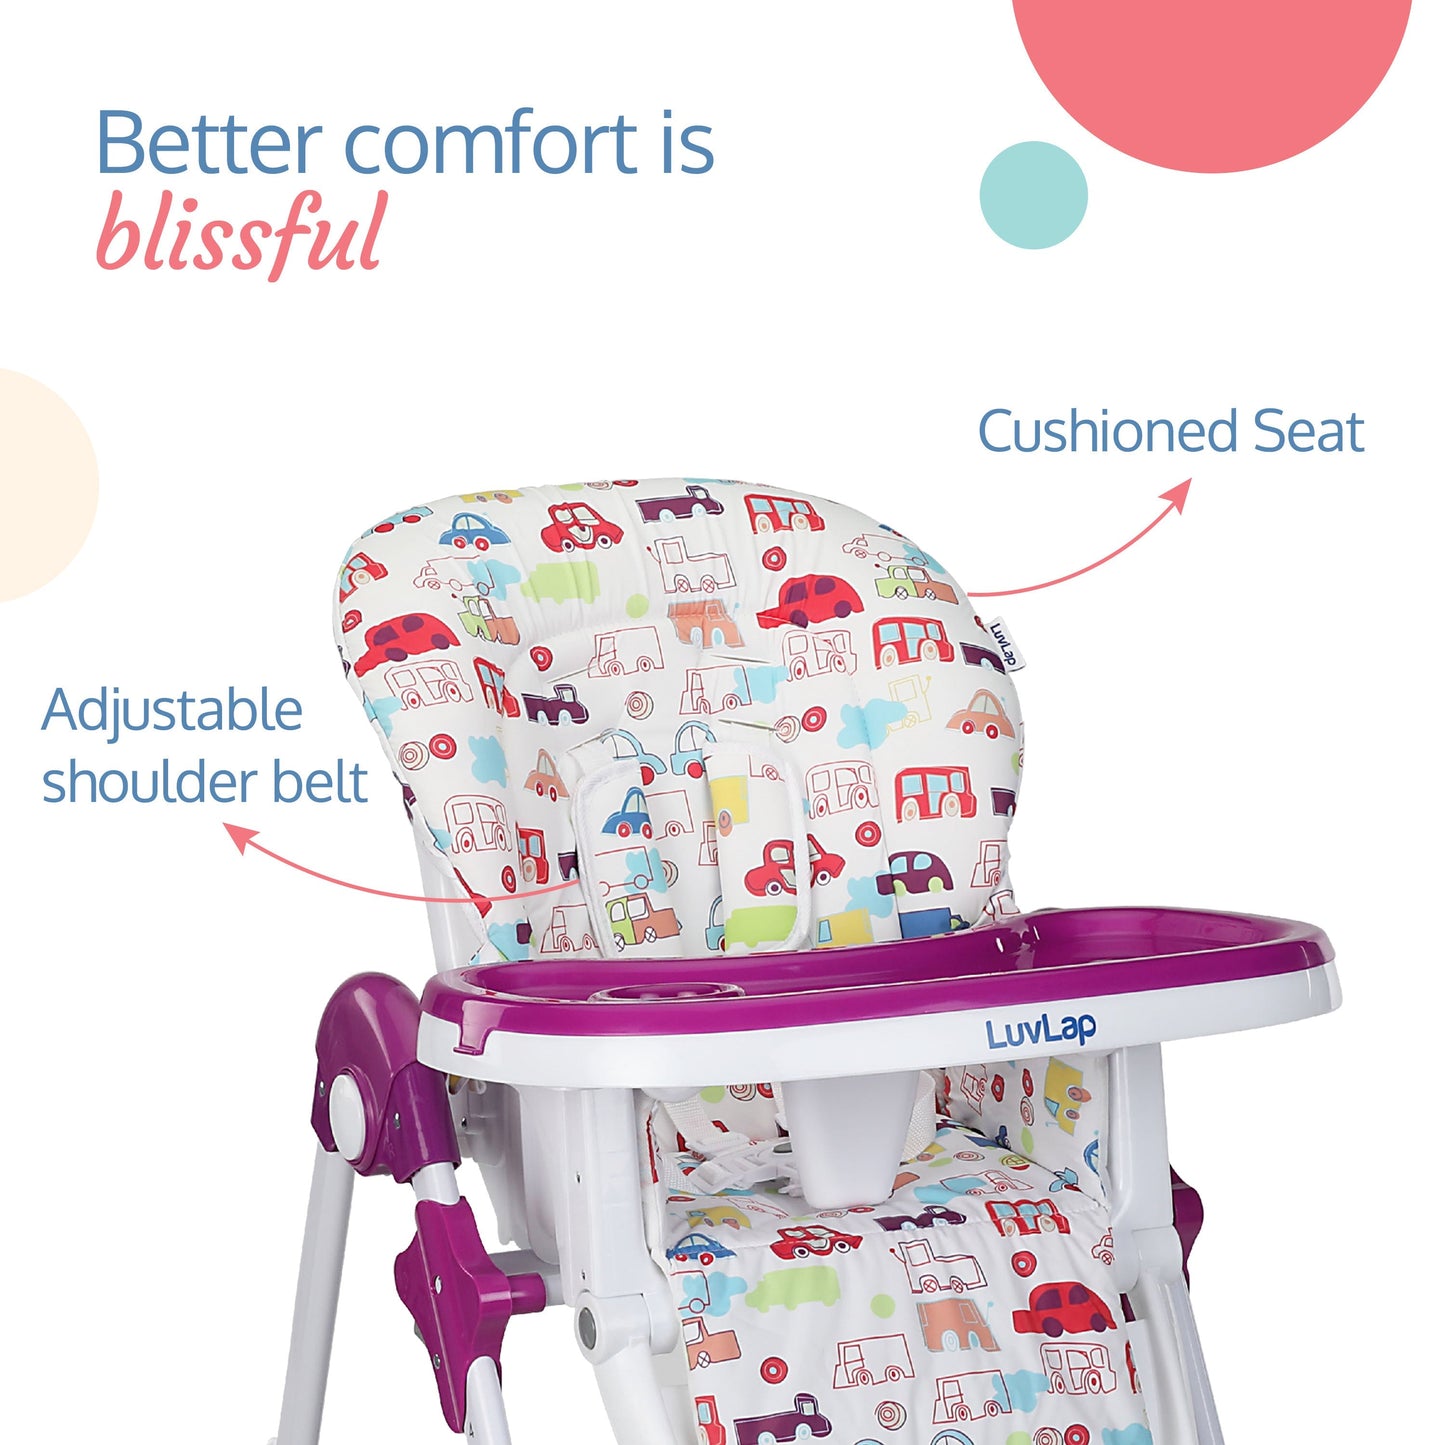 Royal Baby High Chair, Purple